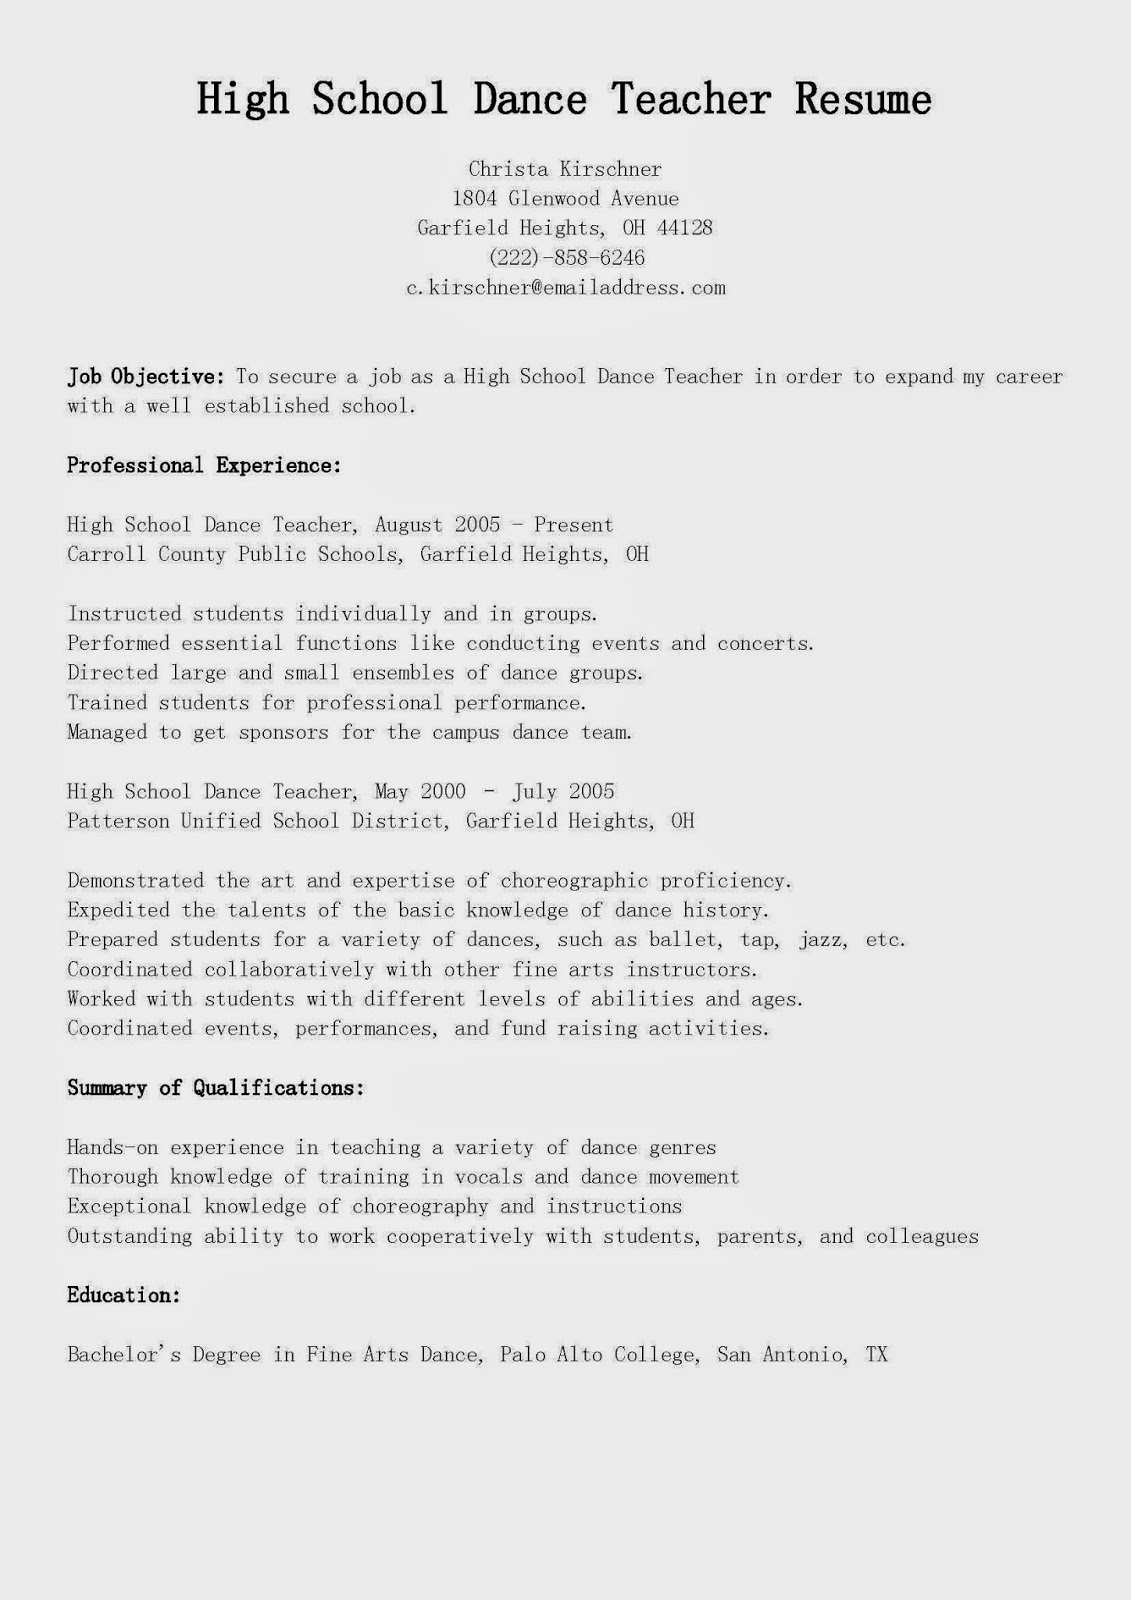 Film resume template